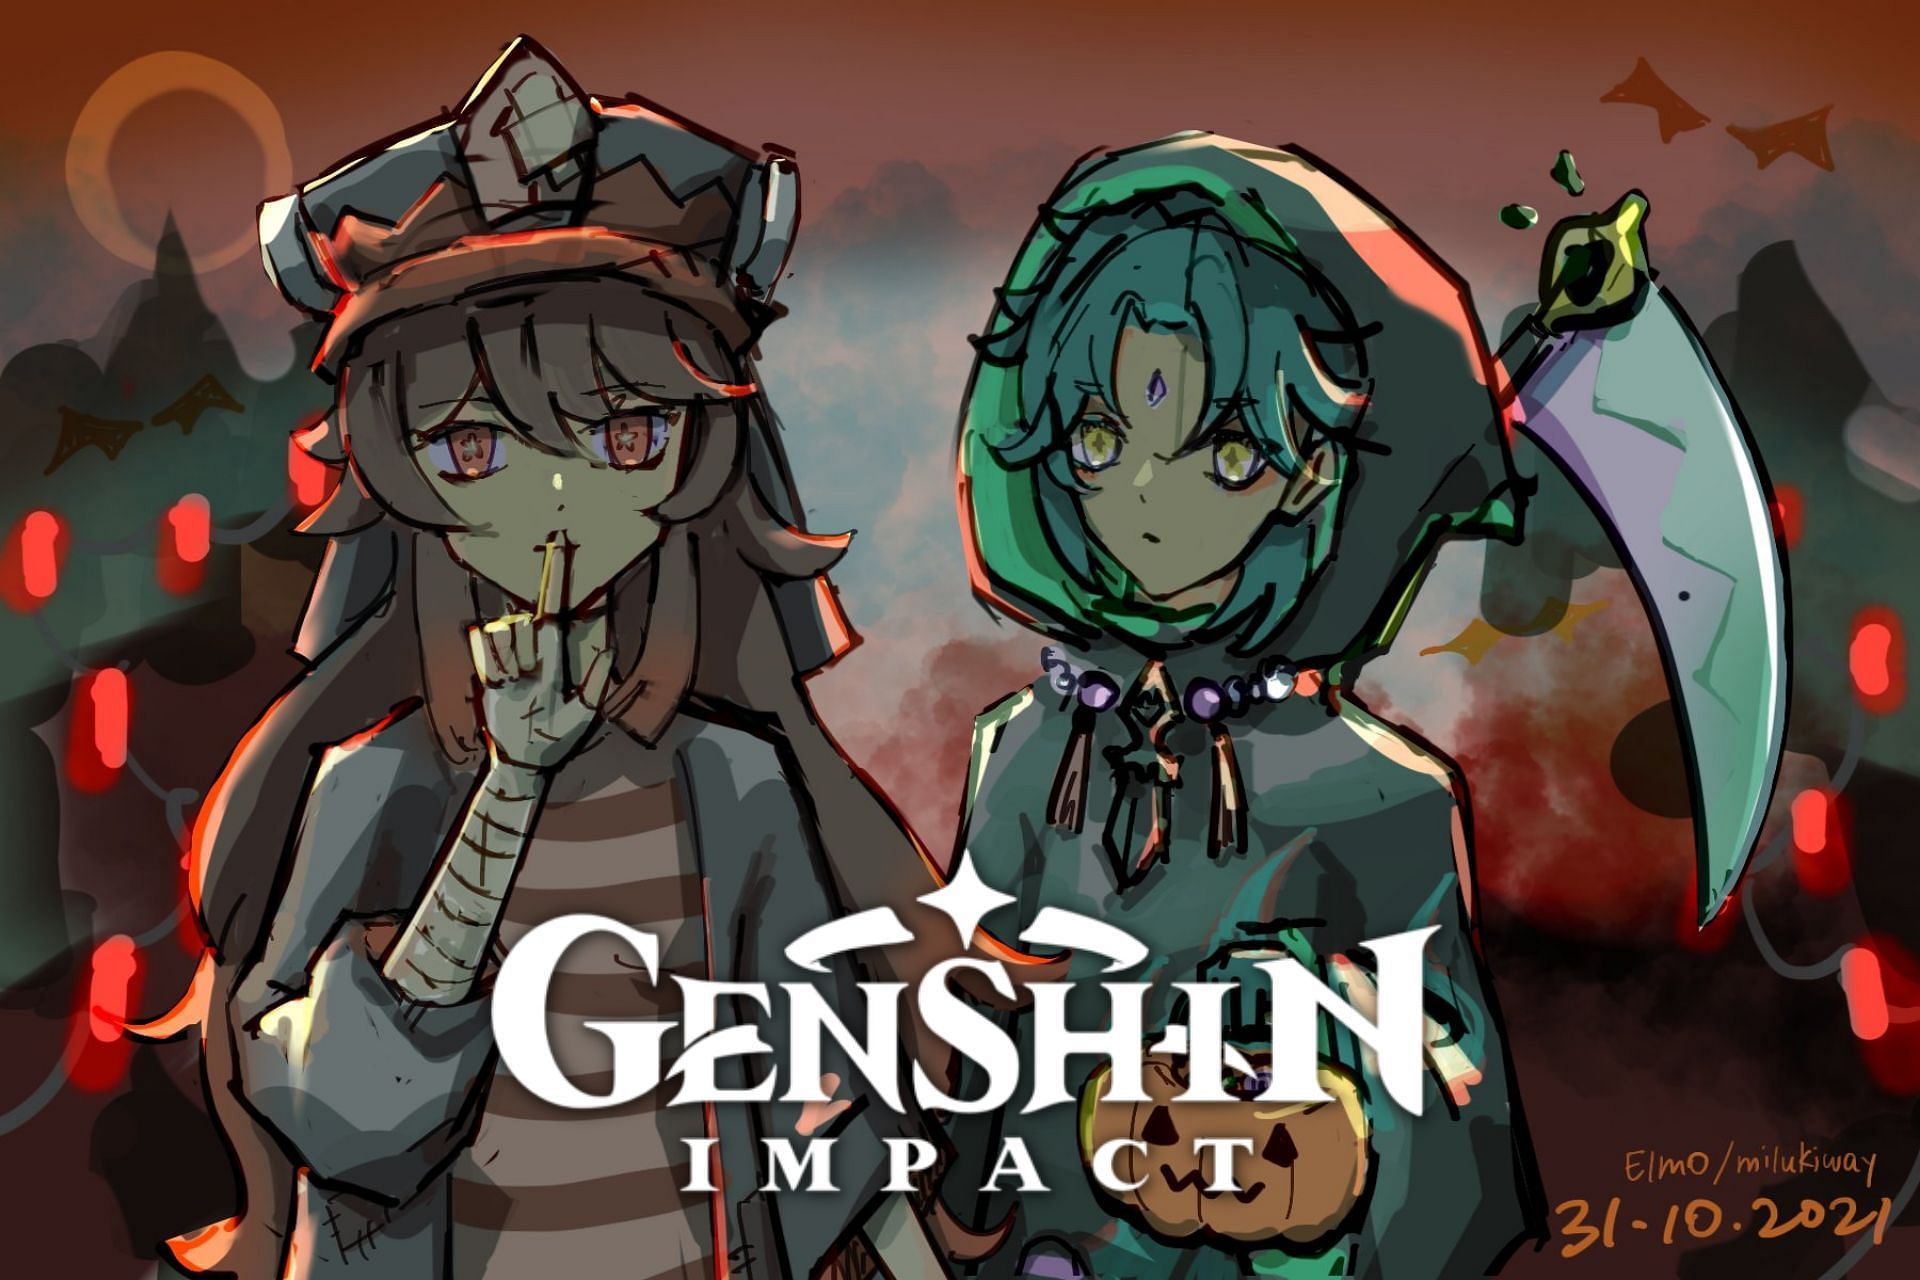 Genshin Impact Halloween fanart (Image via Twitter/Elmxmc)